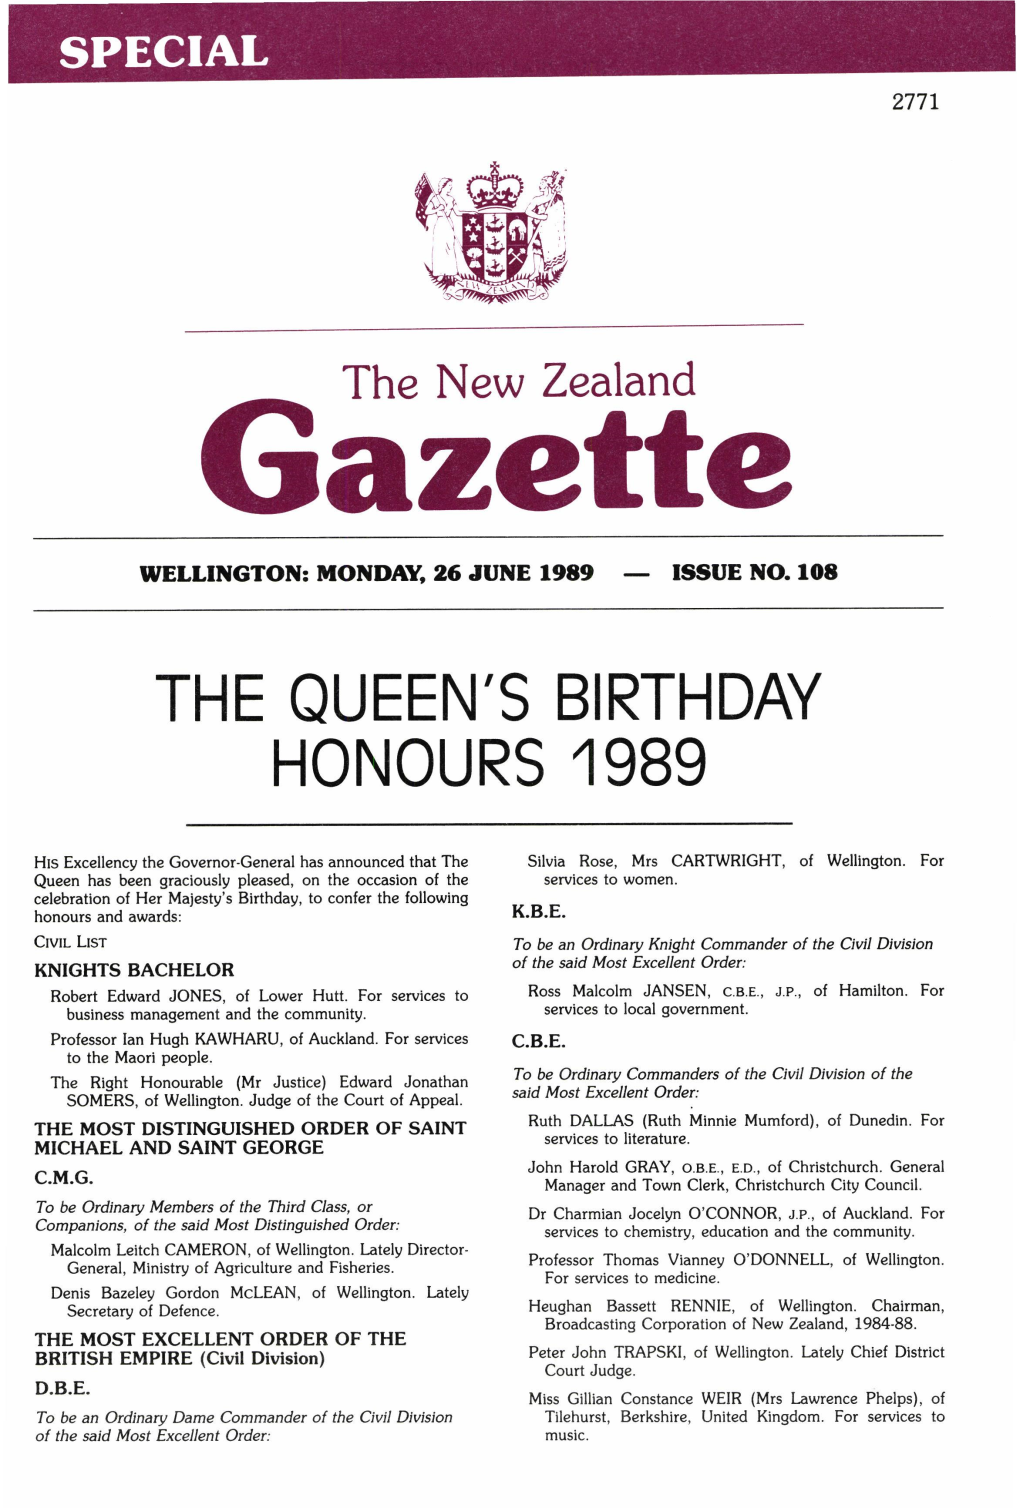 The Queen's Birthday Honours 1989